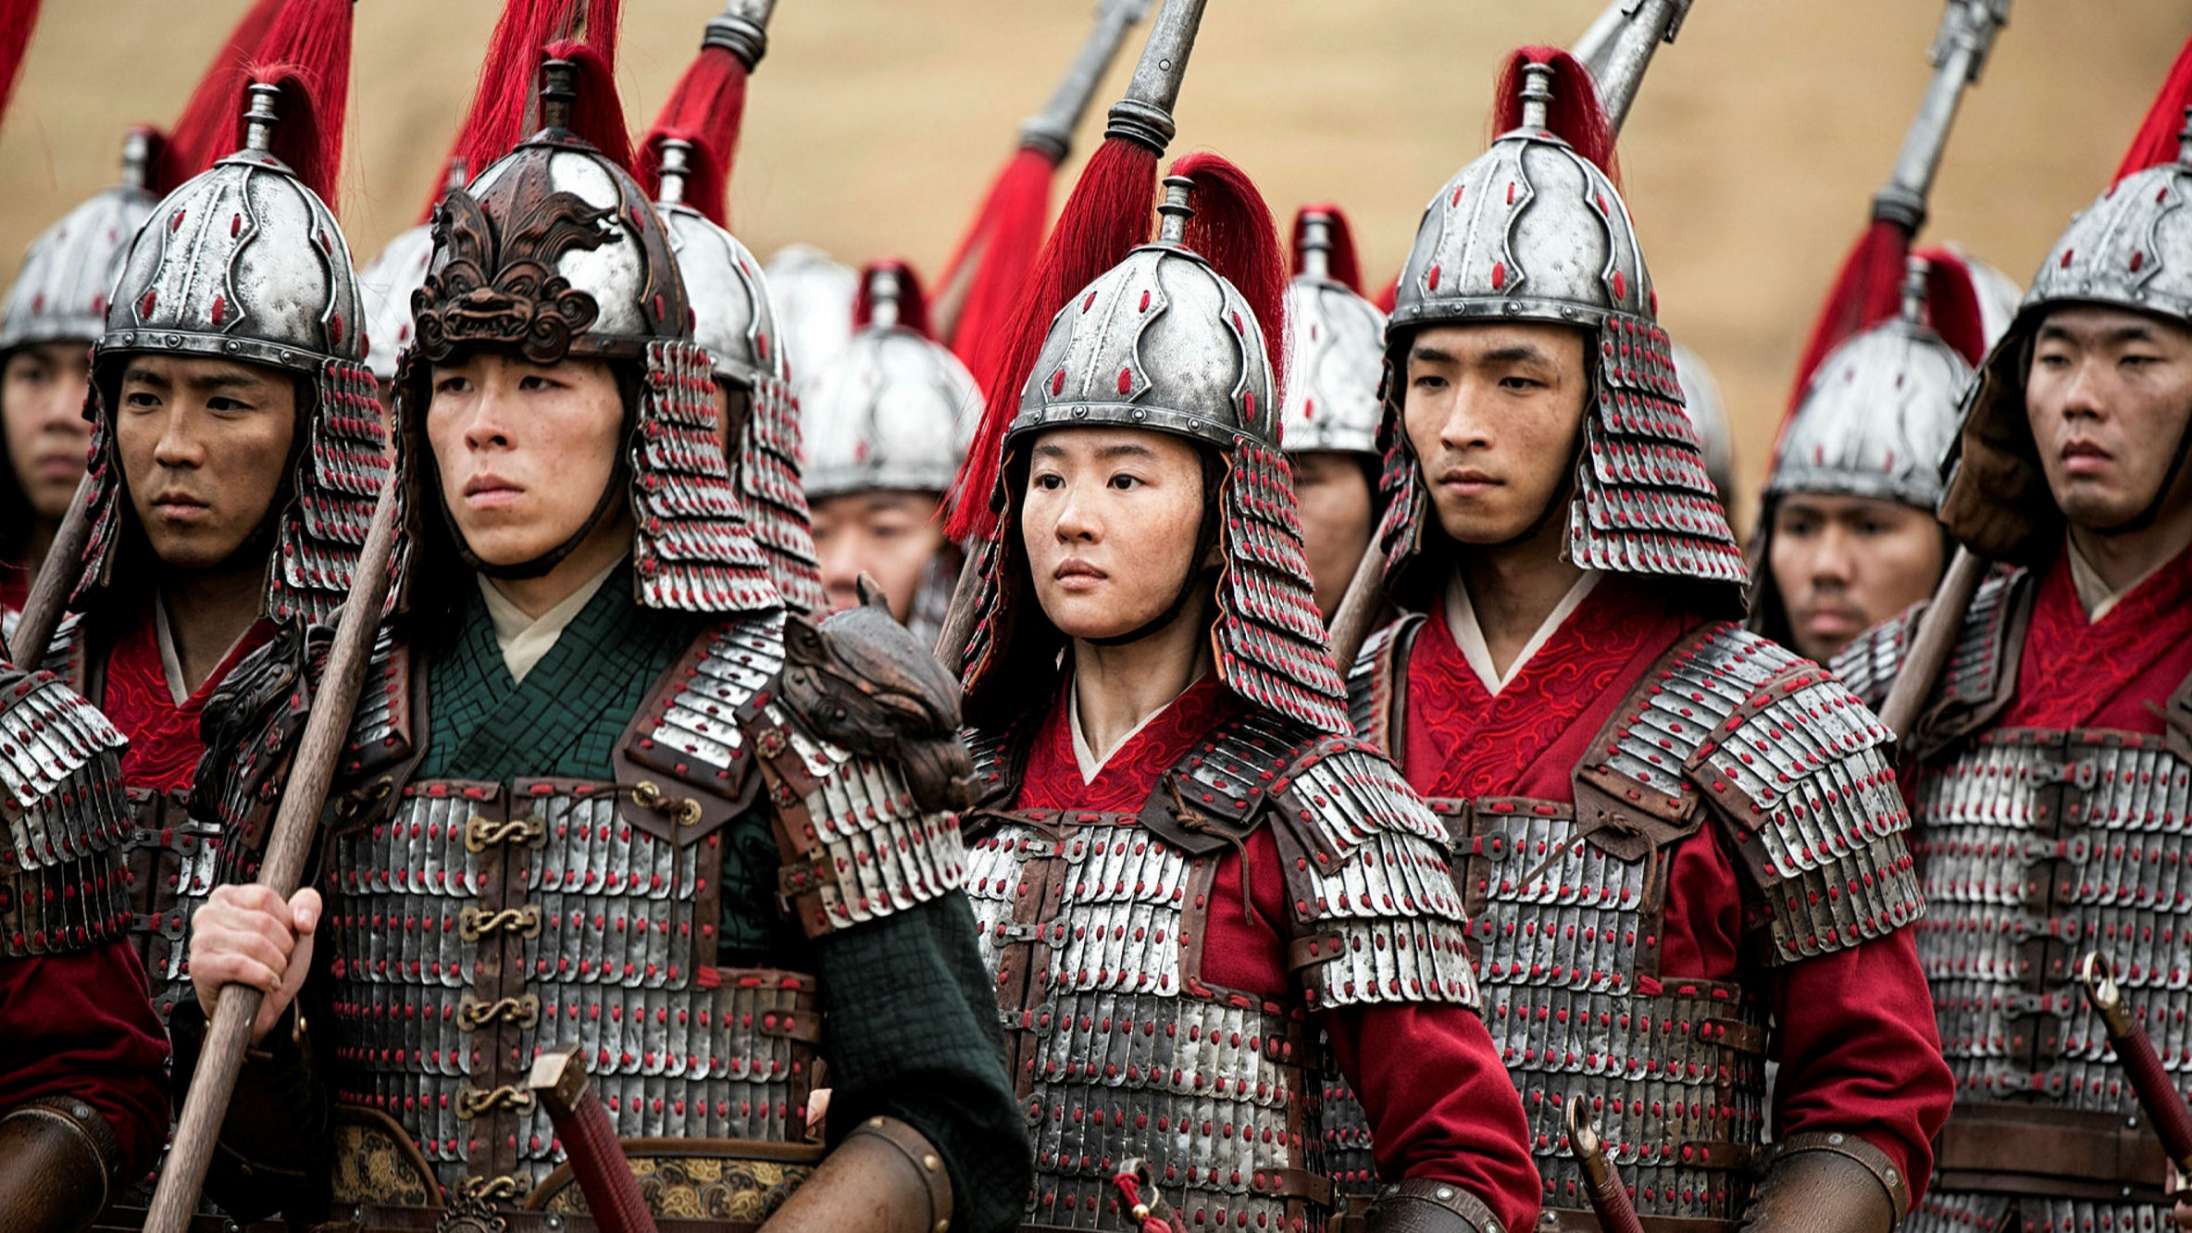 ‘Mulan’ udkommer direkte på streaming i historisk beslutning